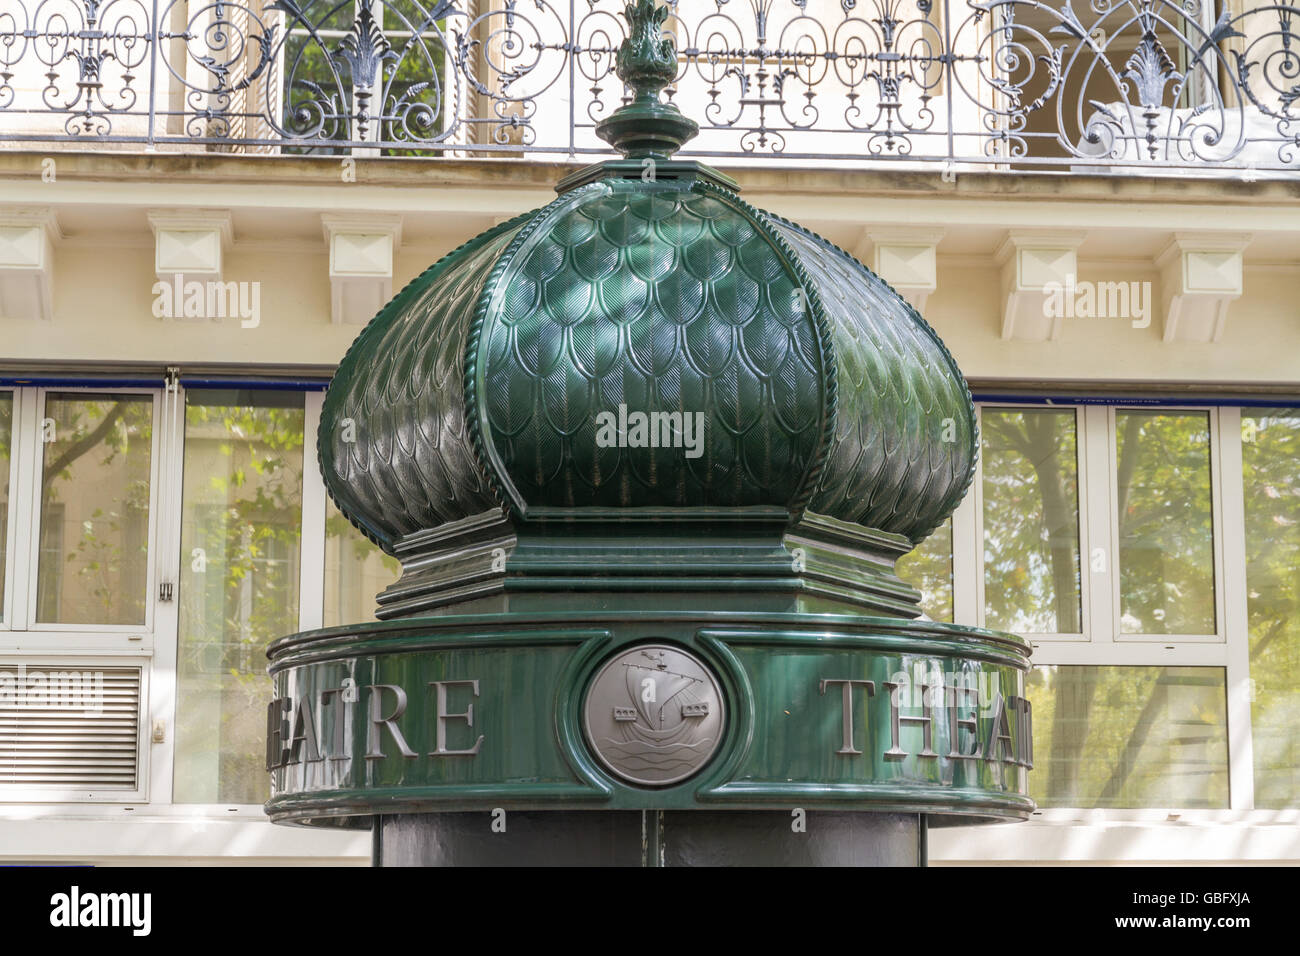 Upper part of morris or advertising column in Paris, France Stock Photo